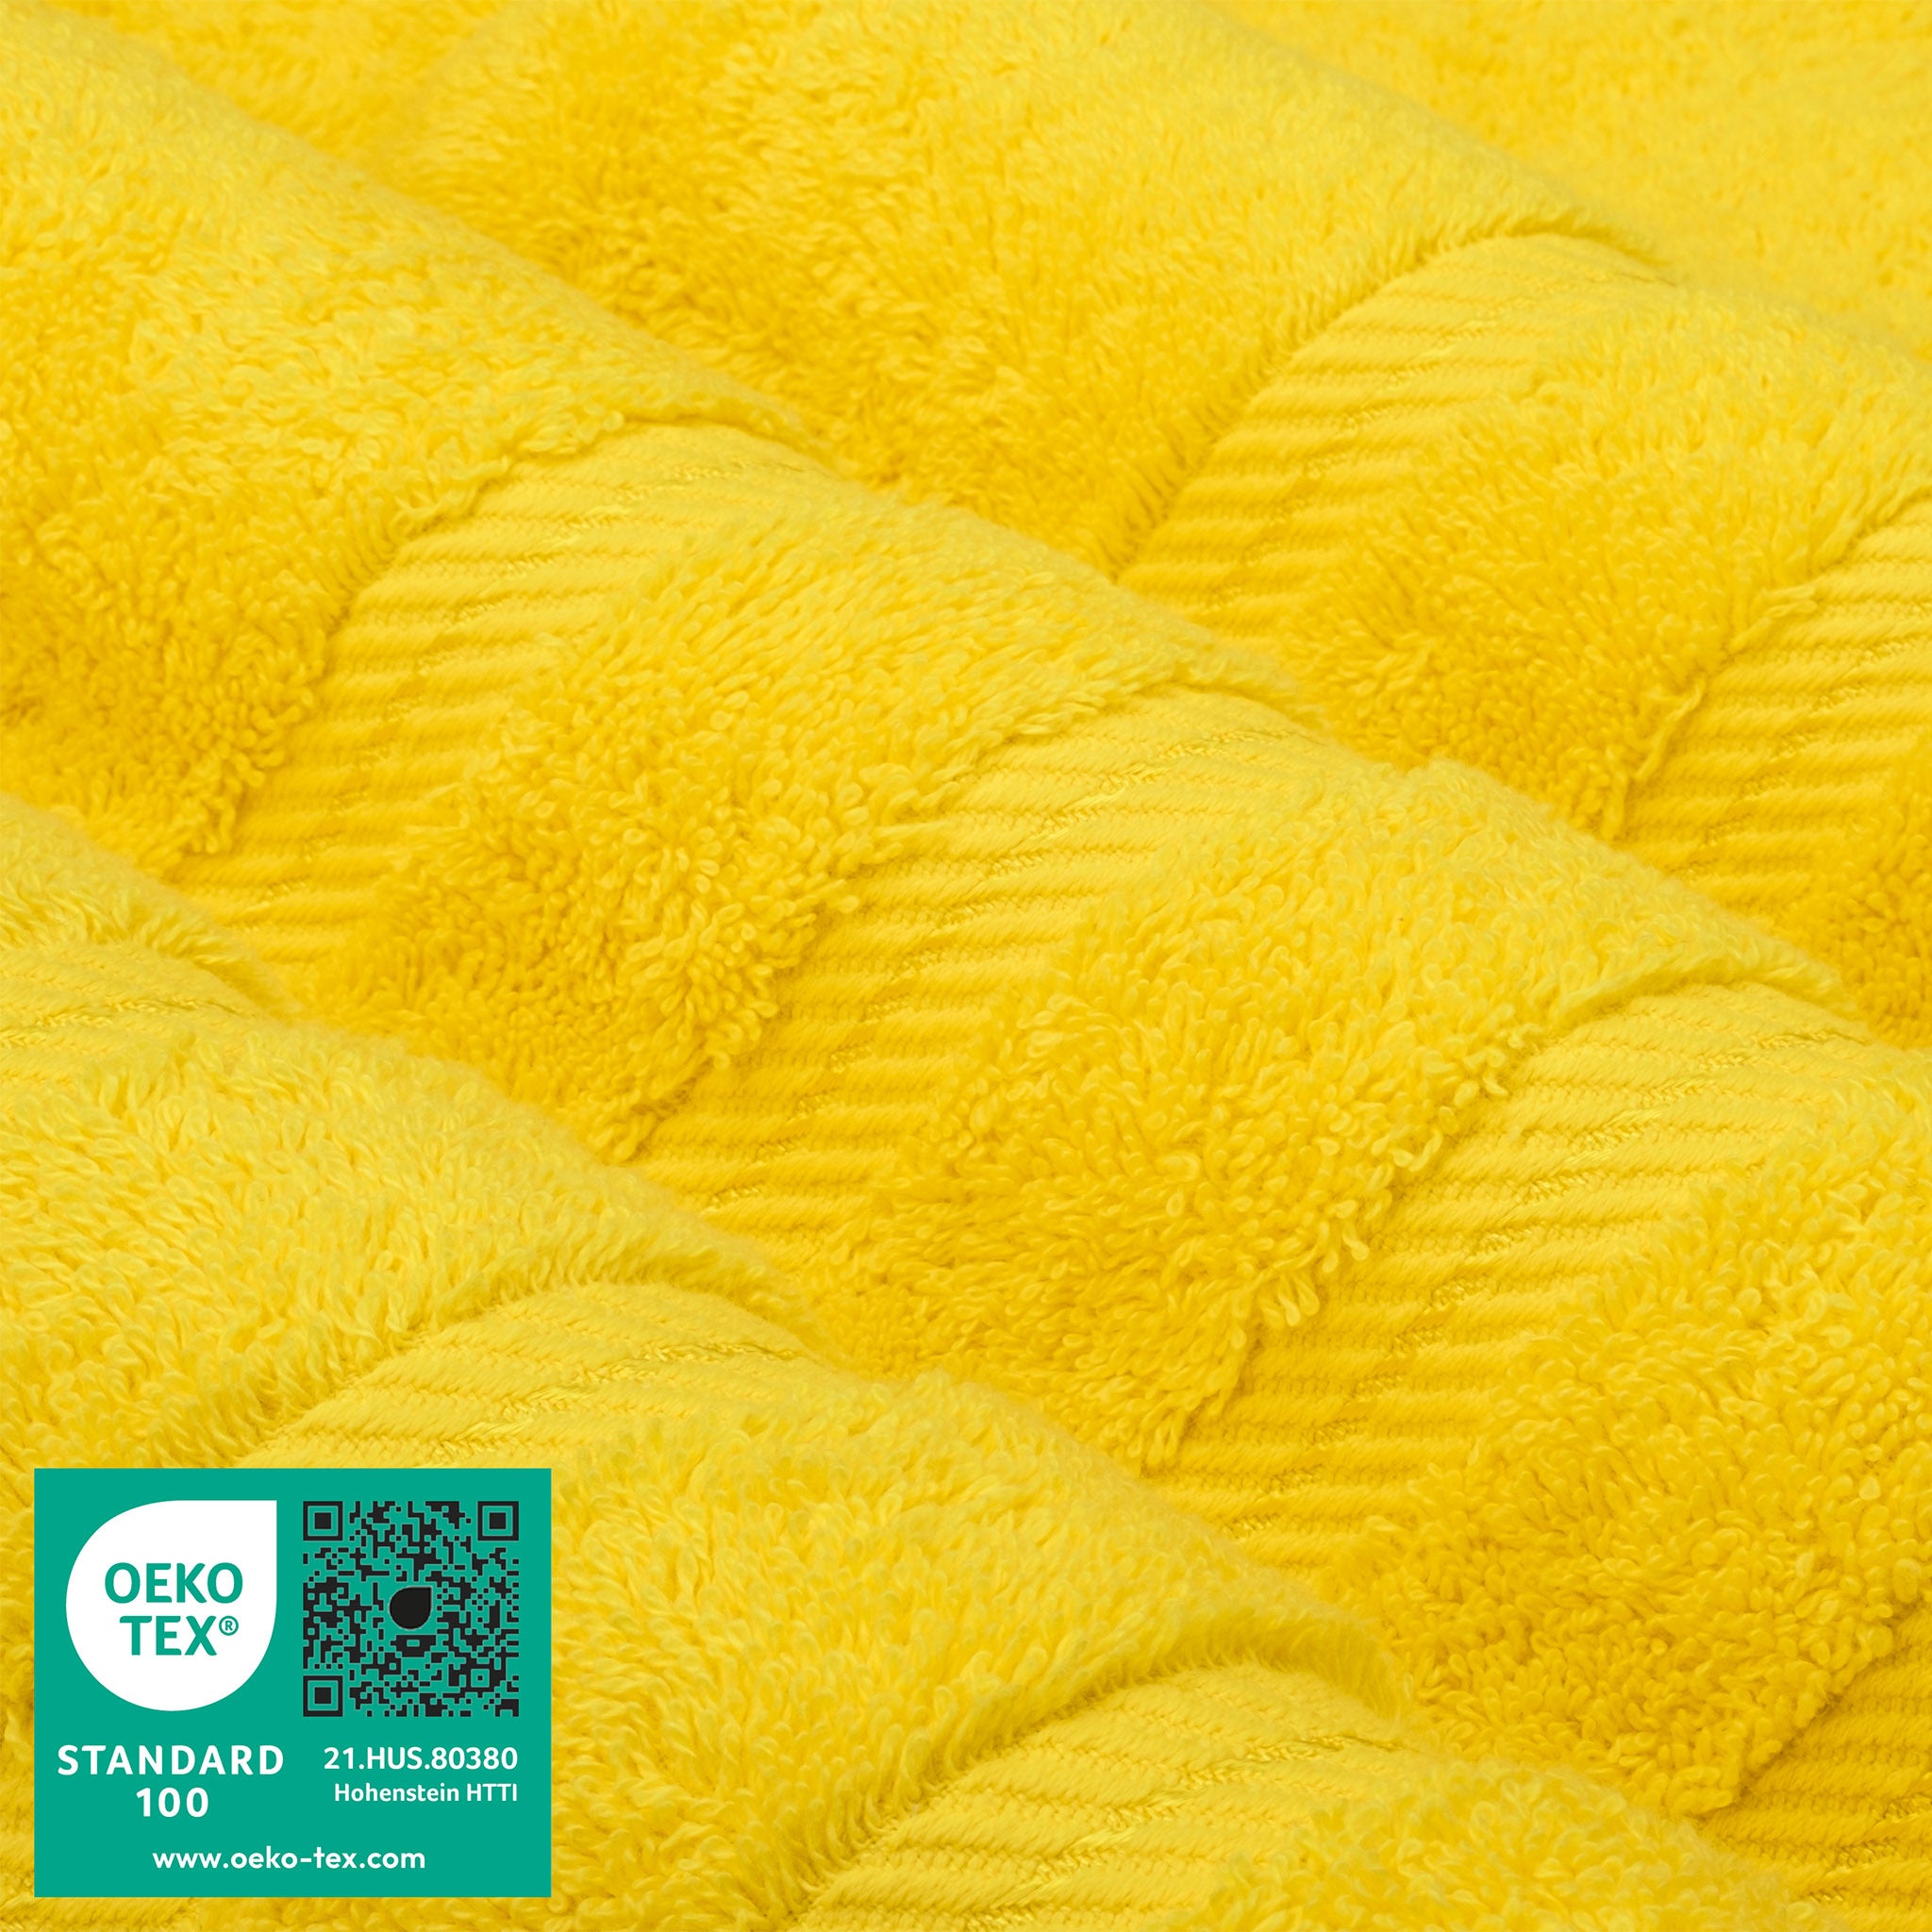 American Soft Linen 100% Turkish Cotton 4 Pack Hand Towel Set Wholesale yellow-3